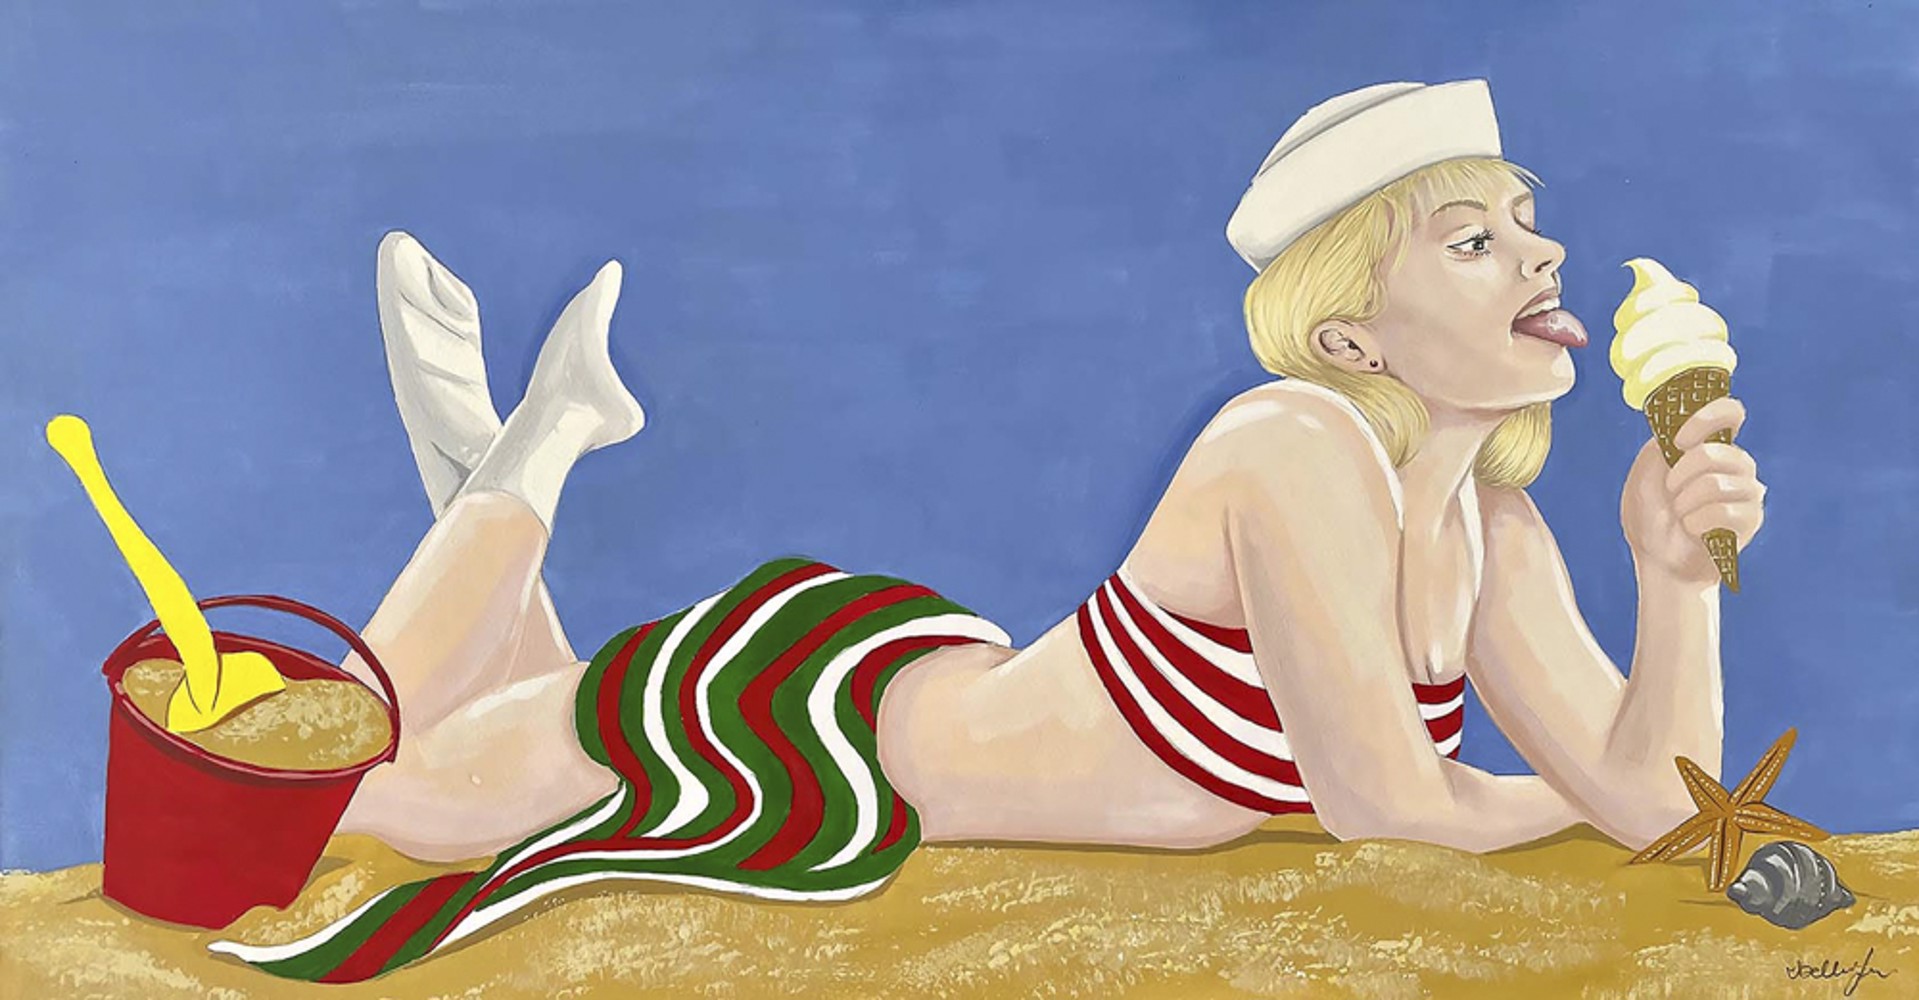 Ice Cream in the Sand by Isabella Almazan